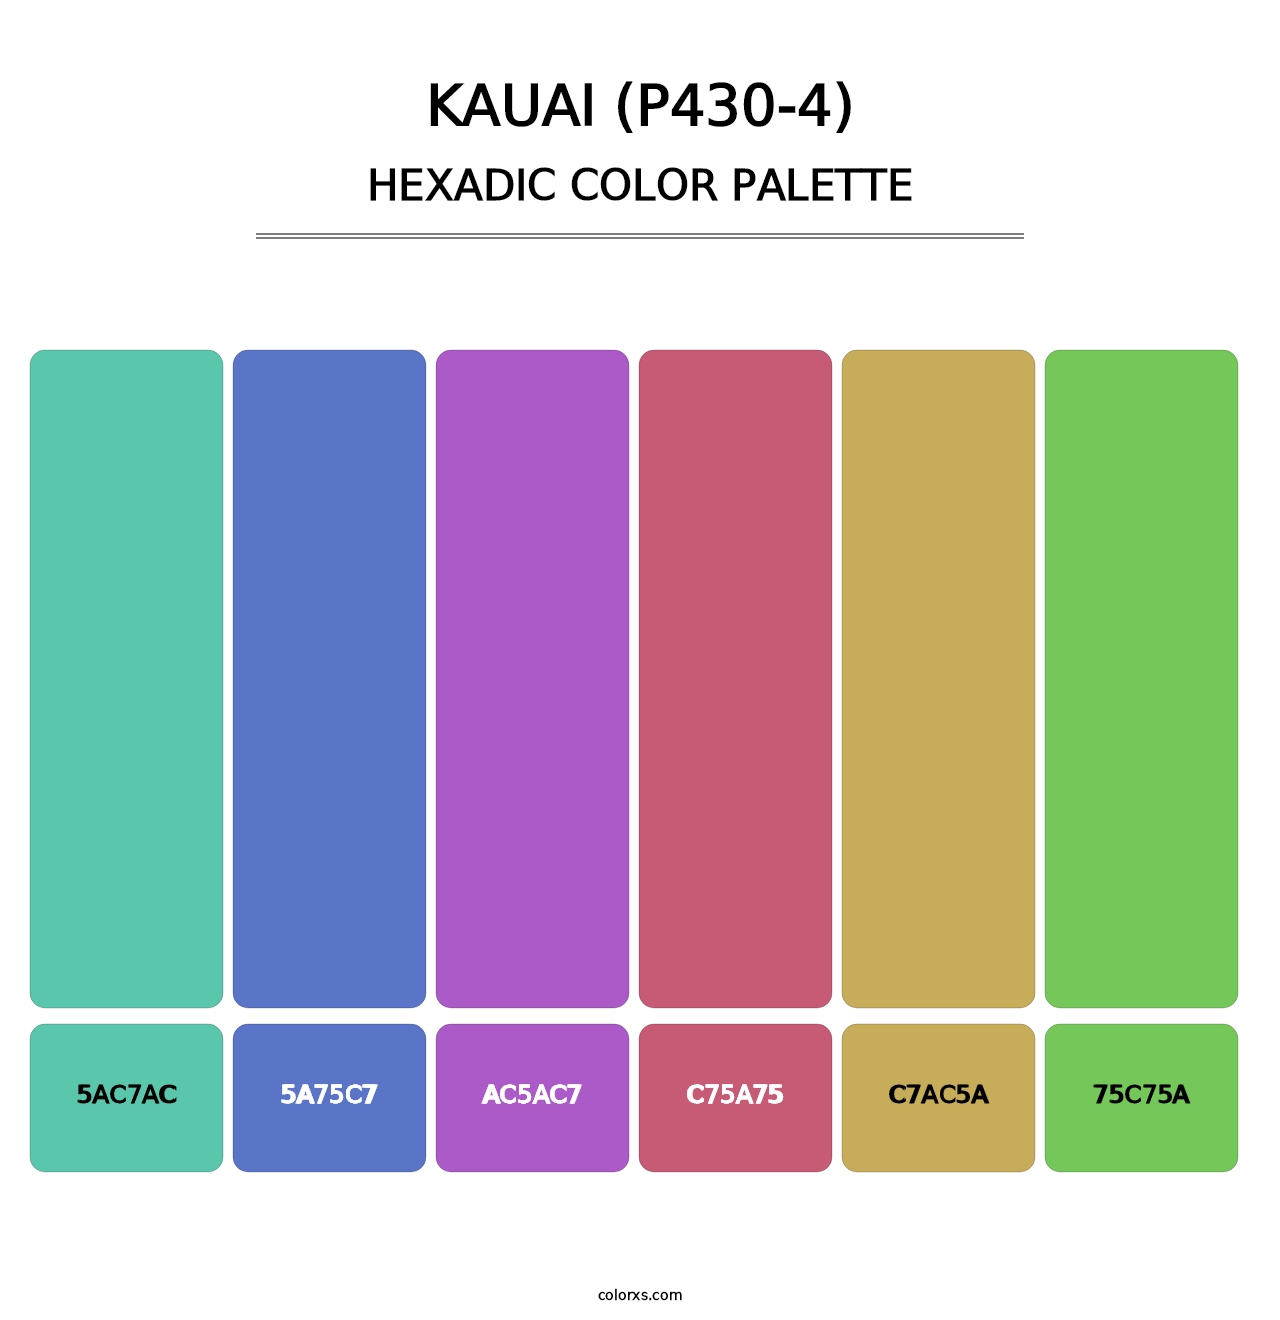 Kauai (P430-4) - Hexadic Color Palette